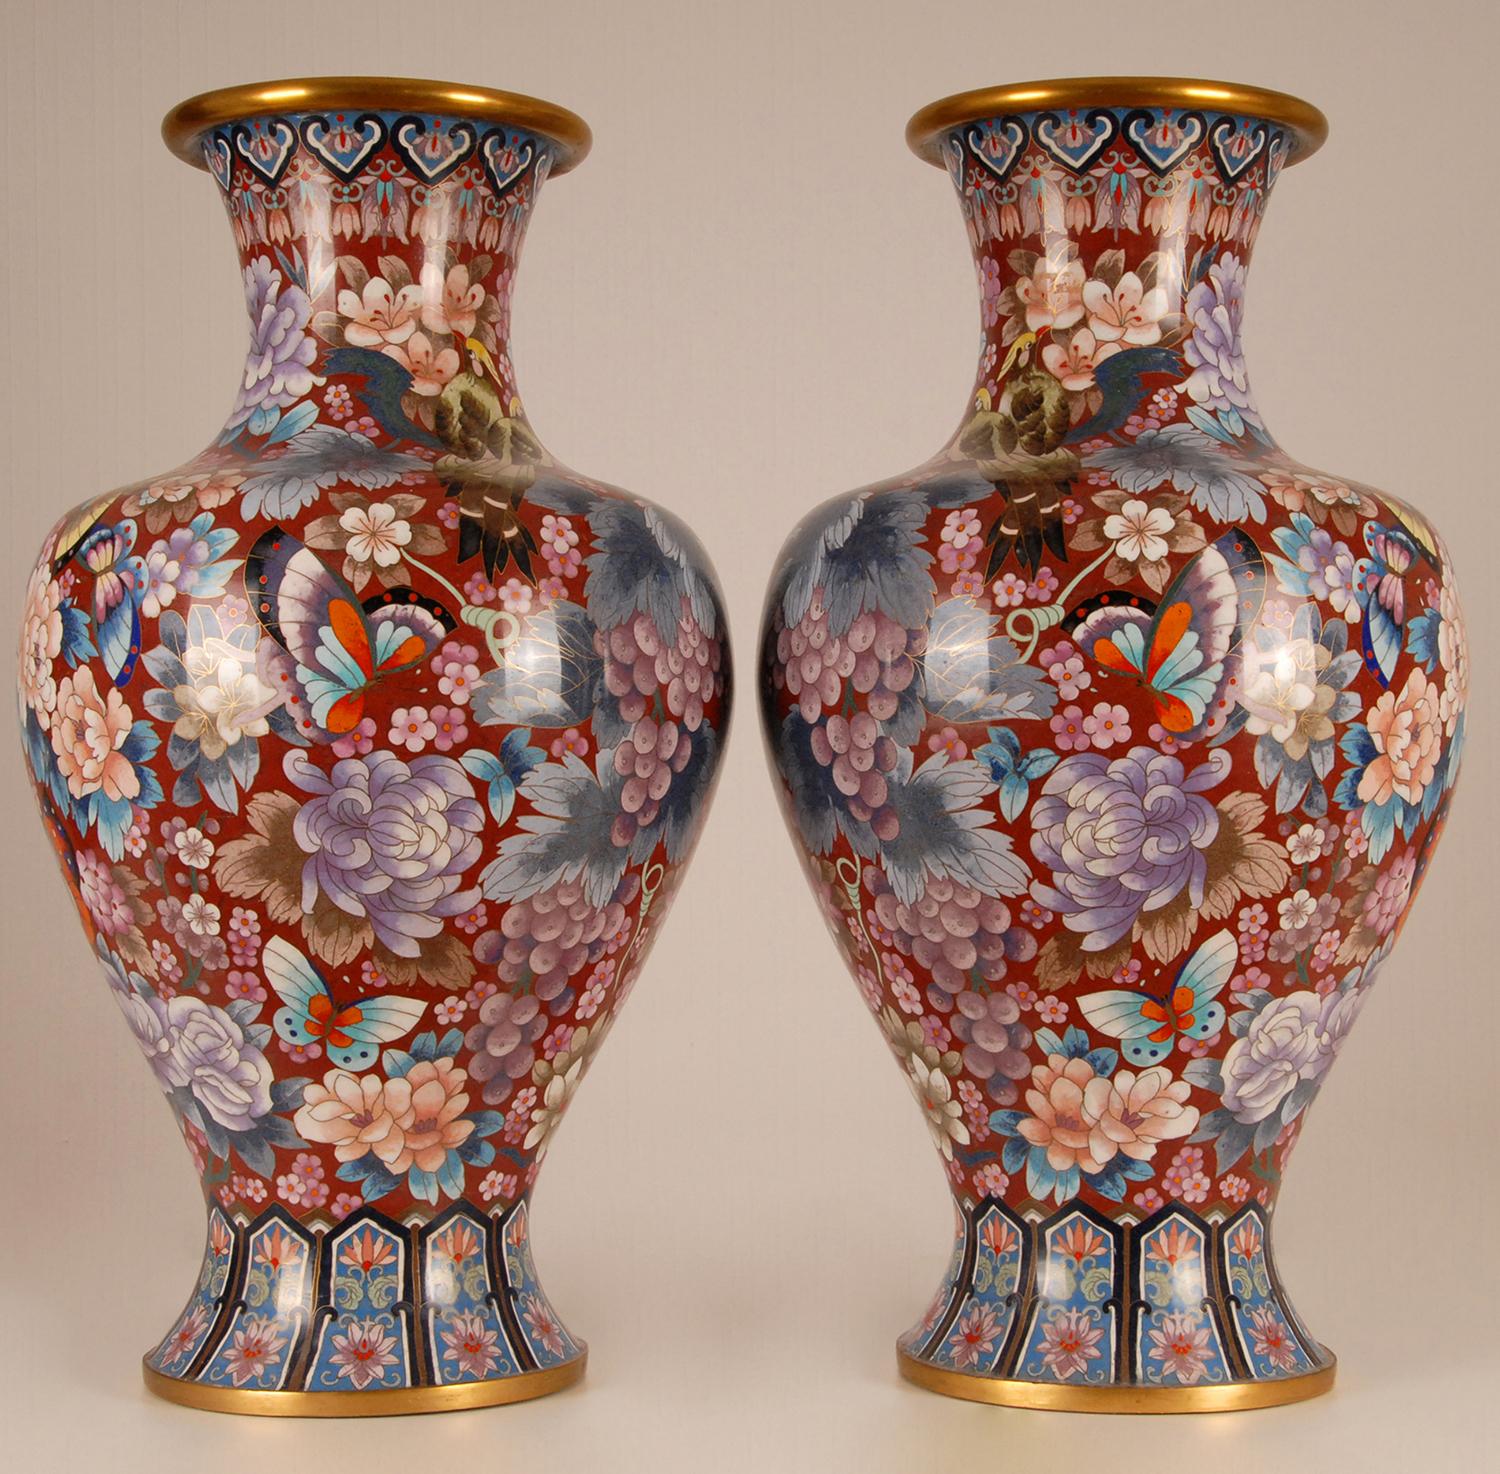 Cloissoné Chinese Cloisonne Gilded Bronze Baluster Vases Enameled Republic Vases a Pair For Sale